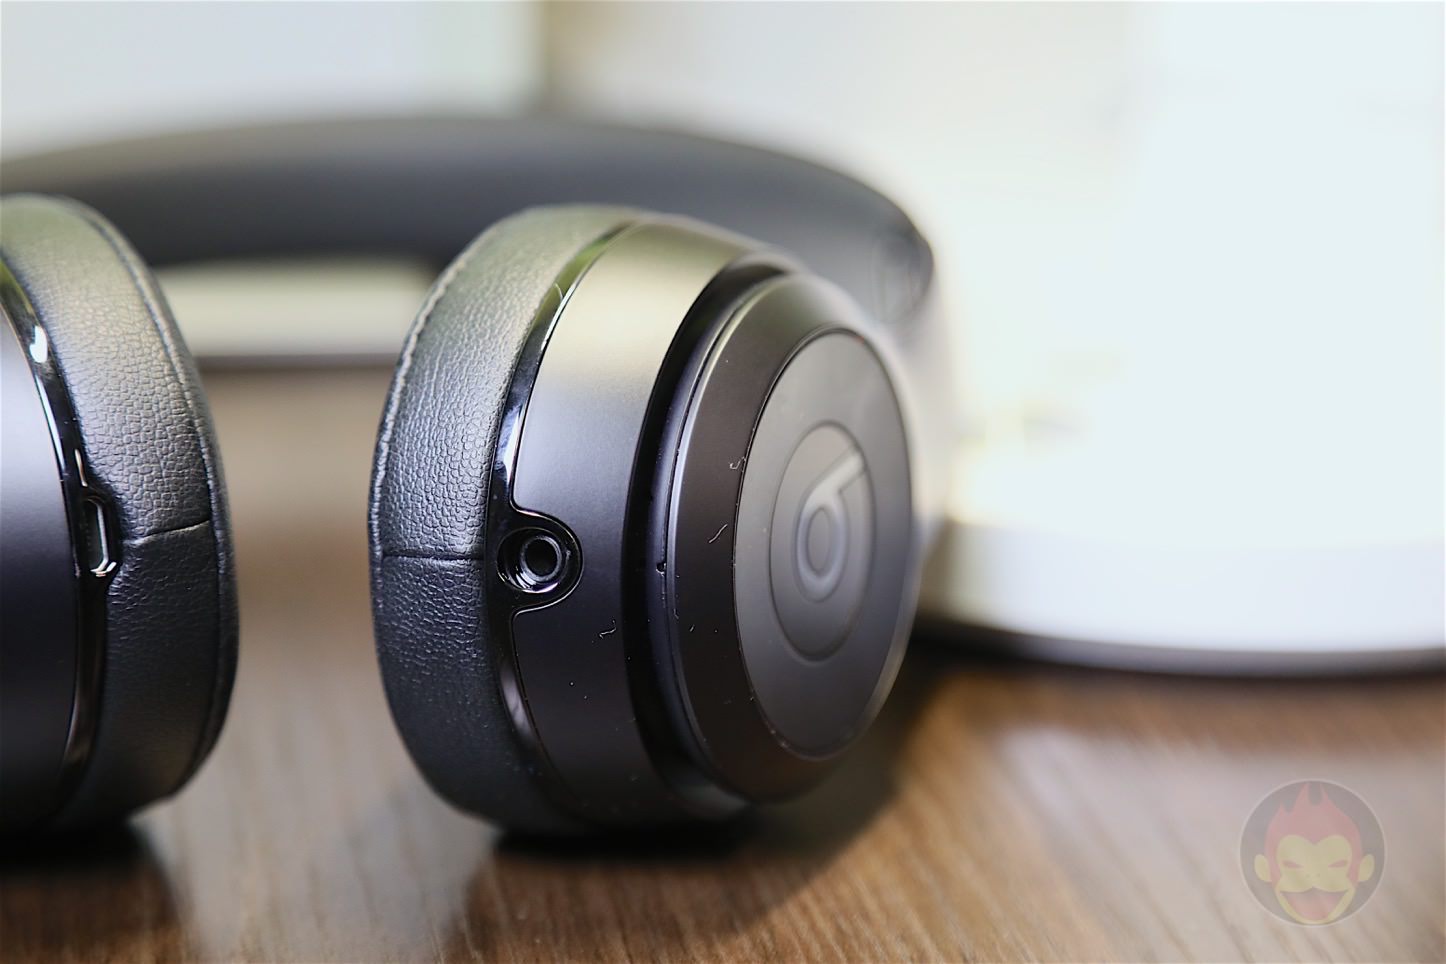 Beats-Solo3-Wireless-Headphones-15.jpg